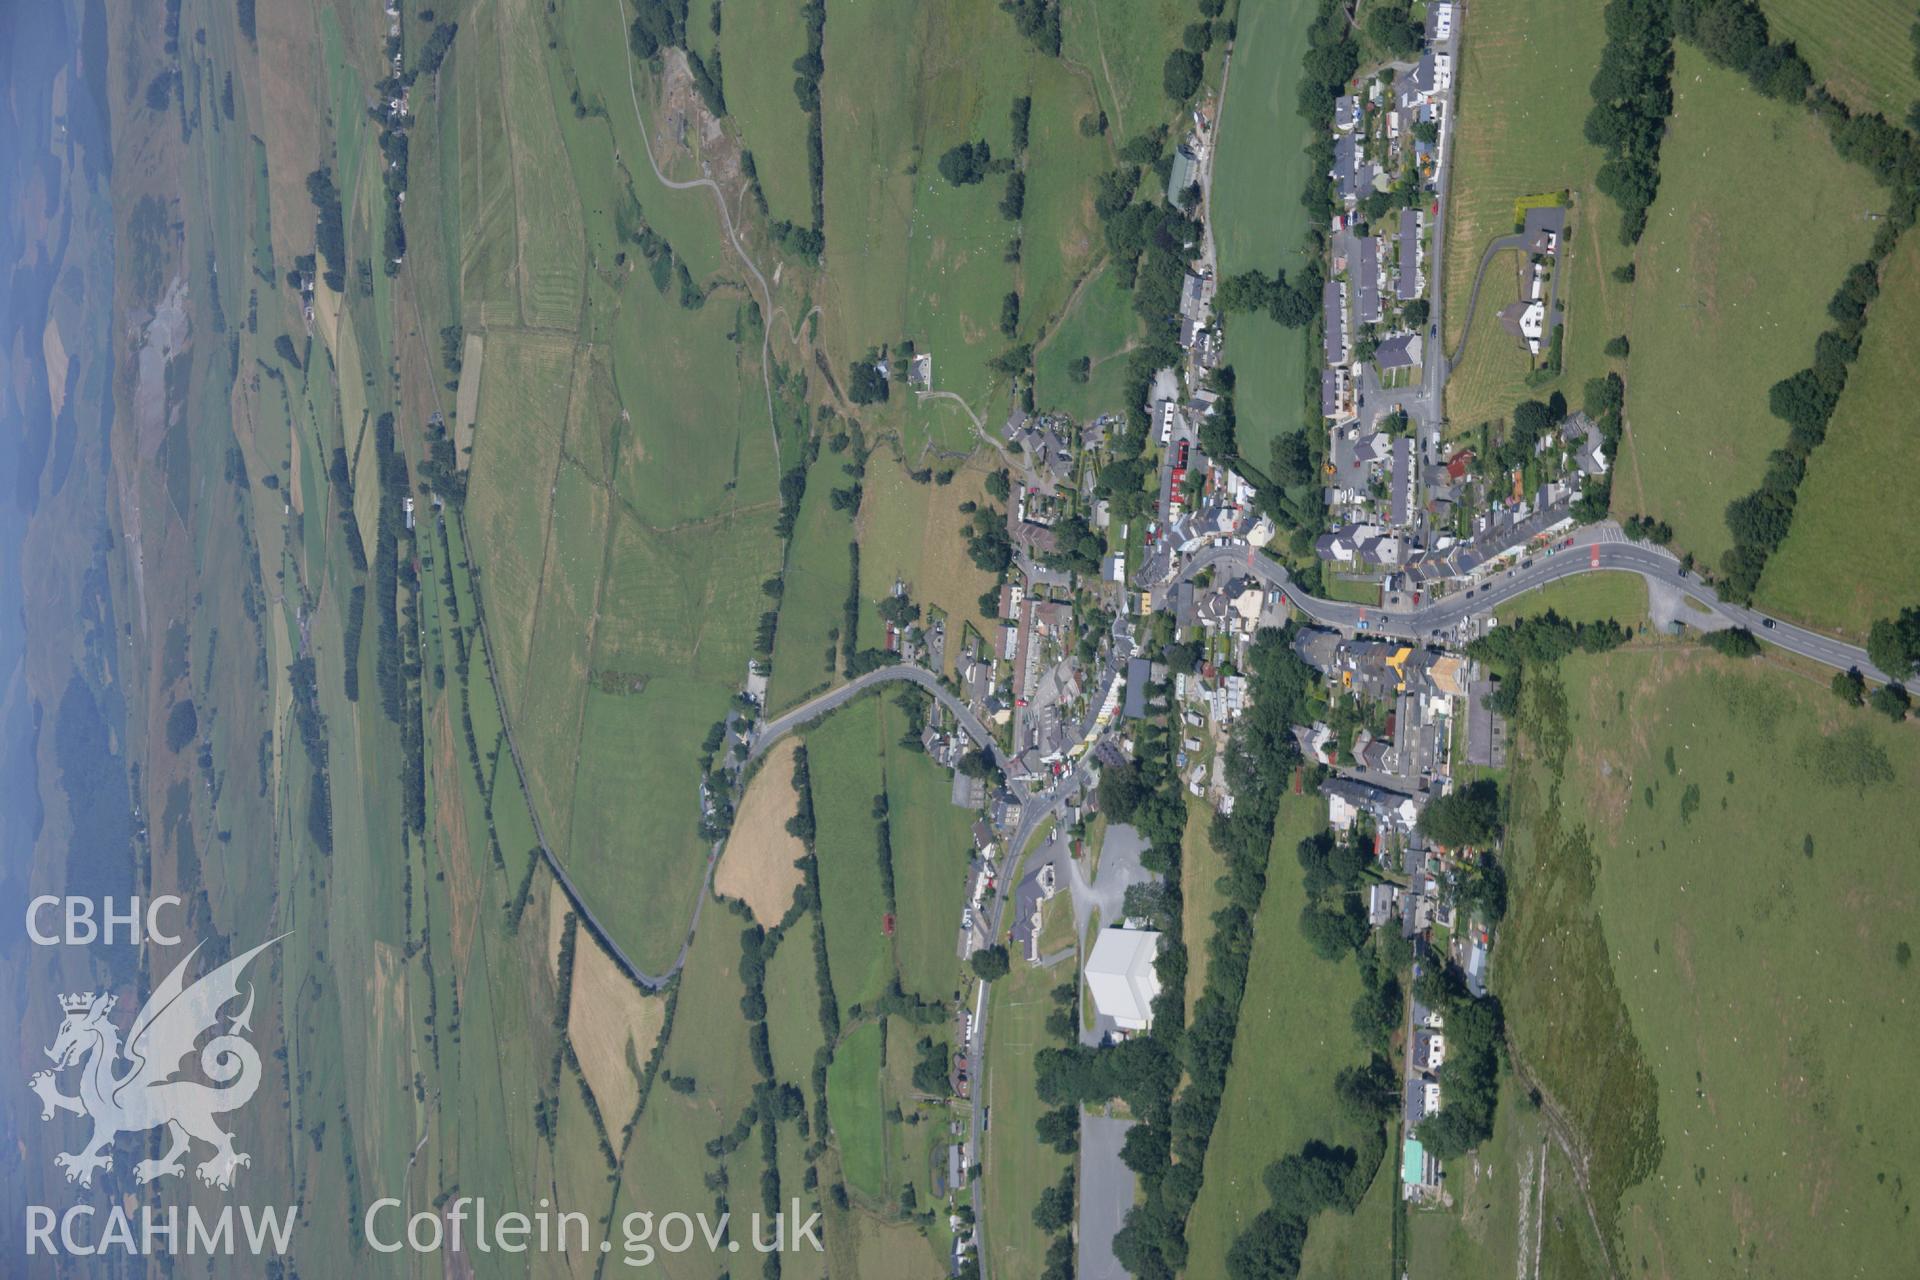 RCAHMW colour oblique aerial photograph of Pontrhydfendigaid. Taken on 17 July 2006 by Toby Driver.